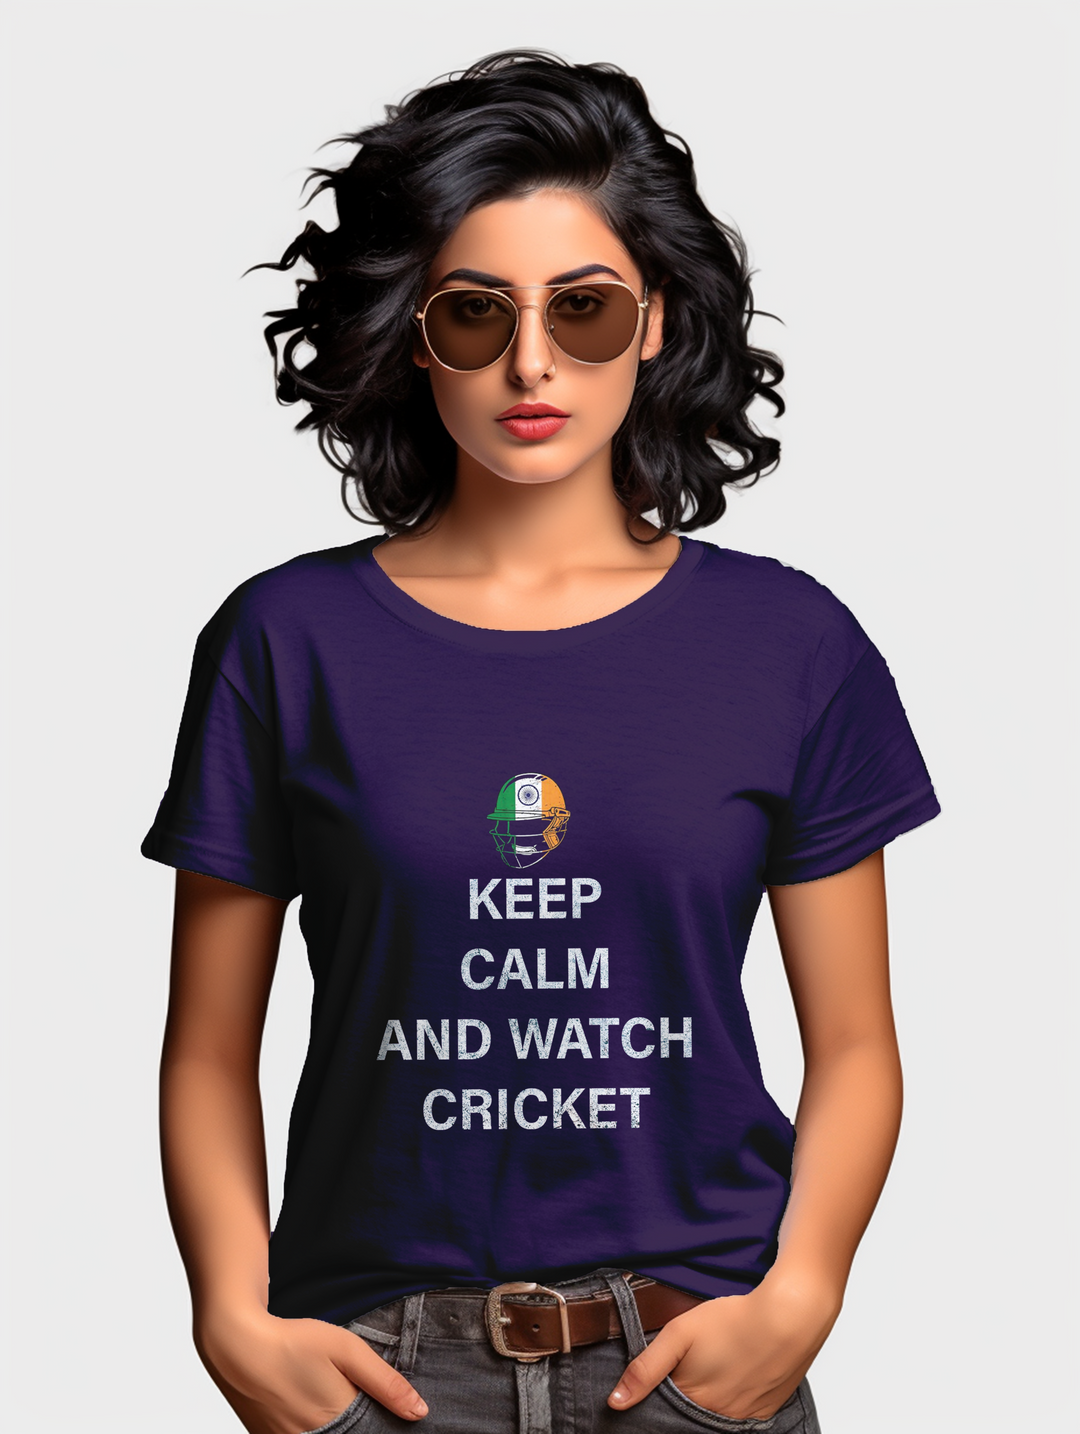 Women's Keep calm and watch cricket tee